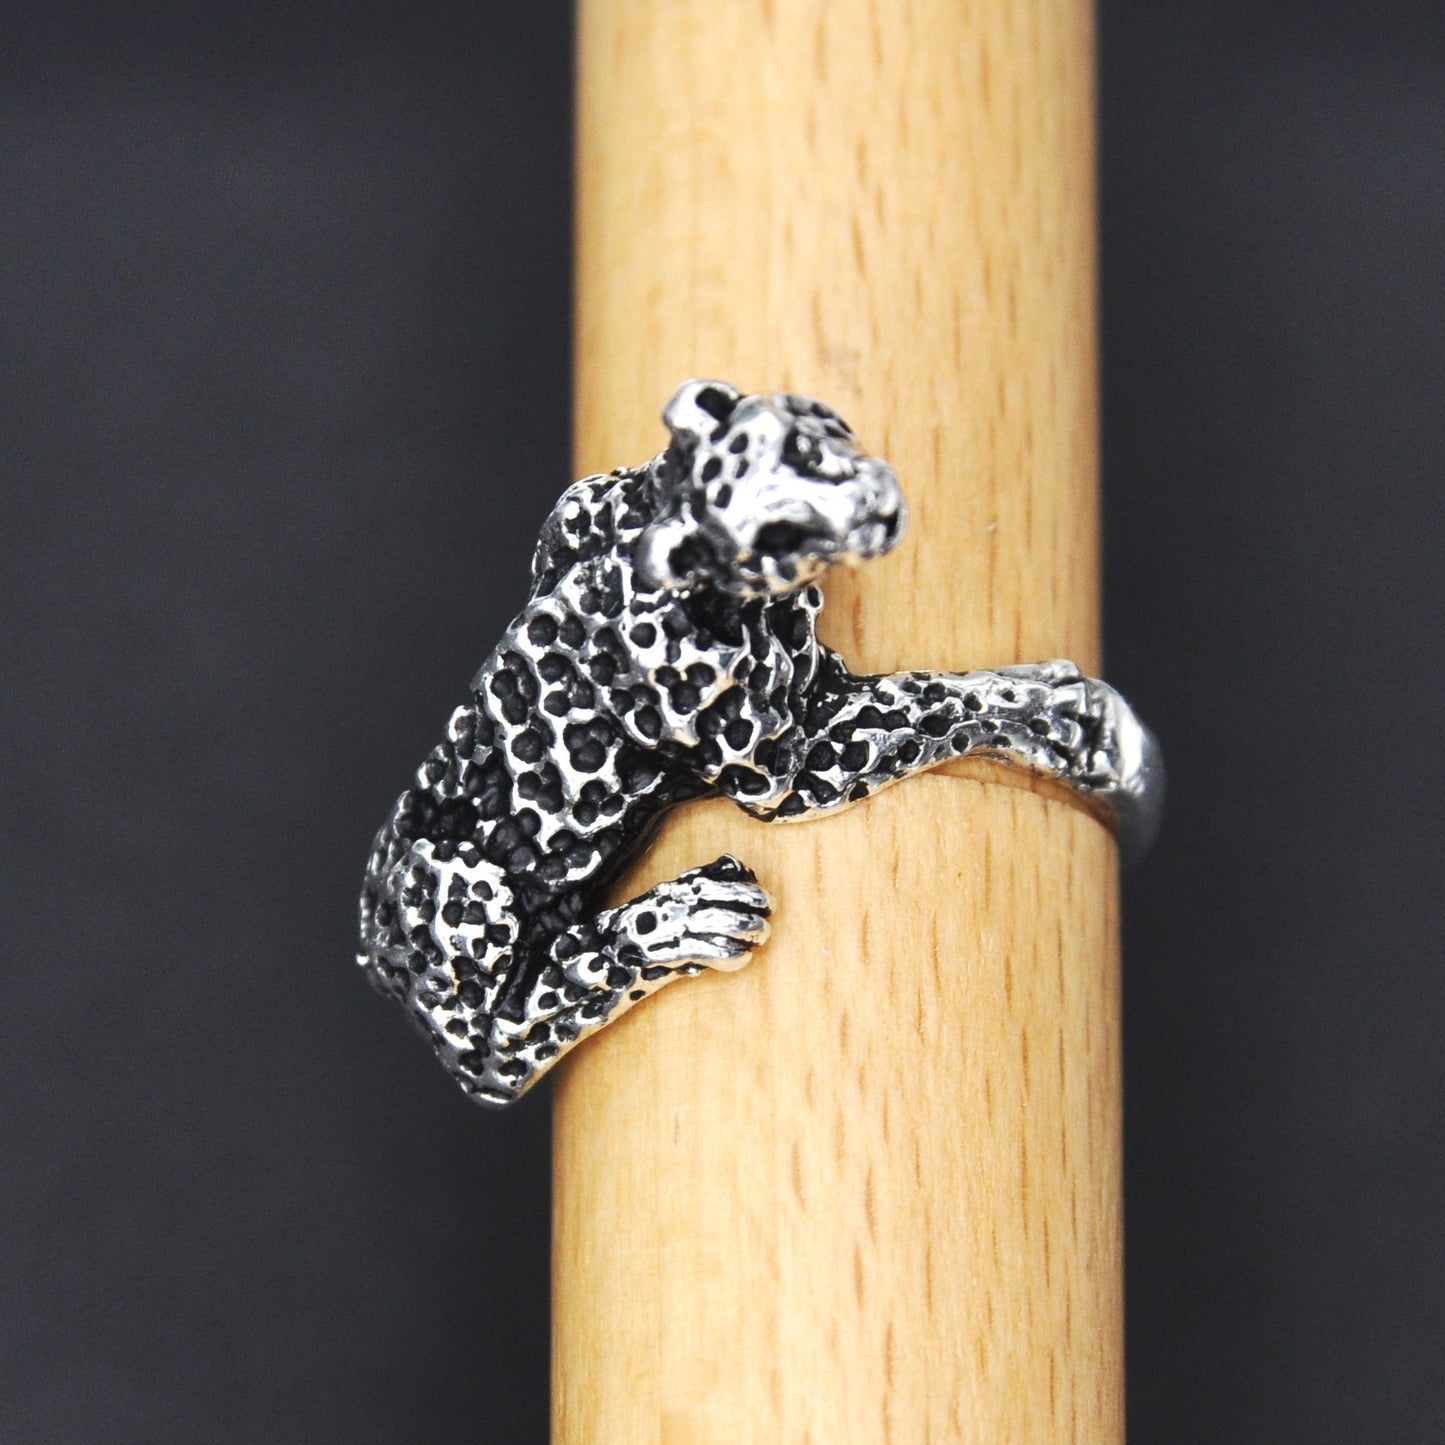 Snow Leopard Ring, Sterling Silver, .925, Endangered Species.